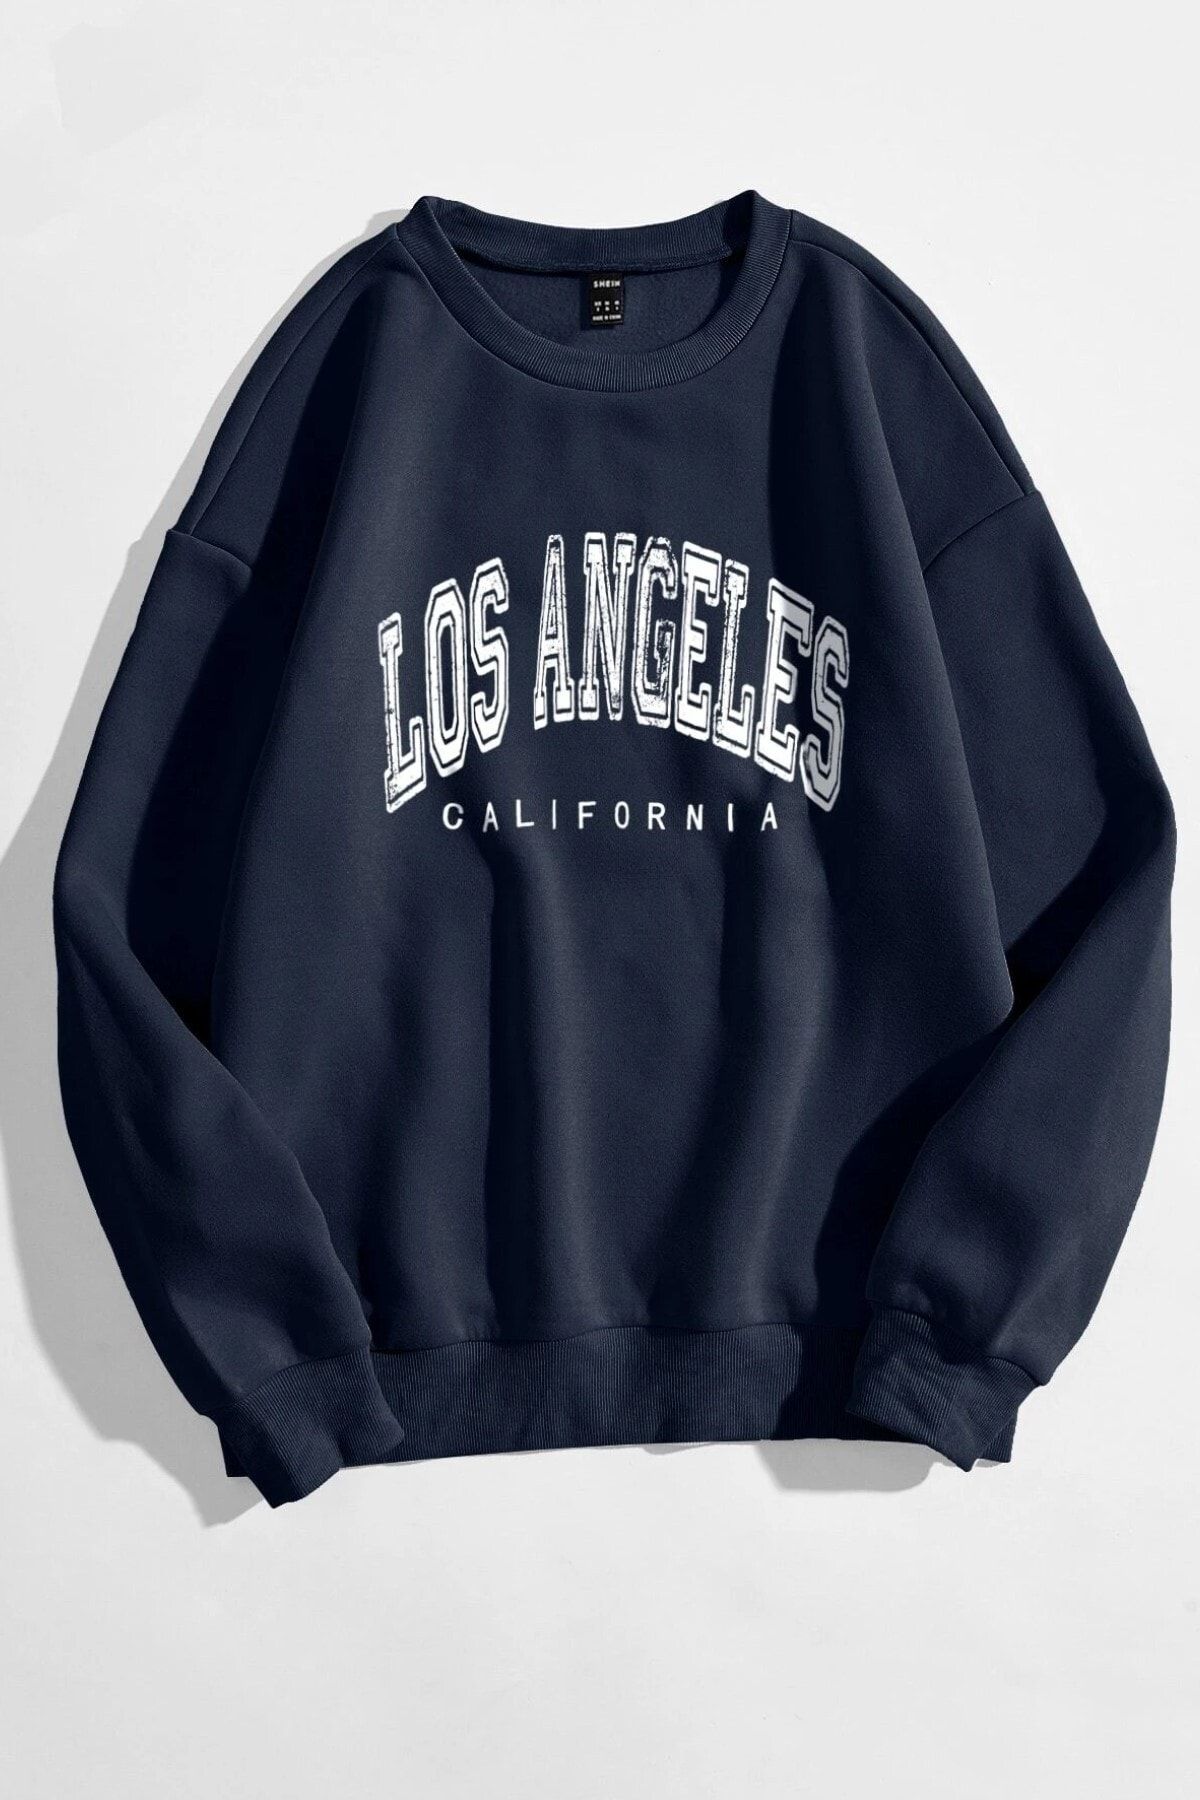 MODAGEN Unisex Los Angeles Lacivert Oversize Sweatshirt